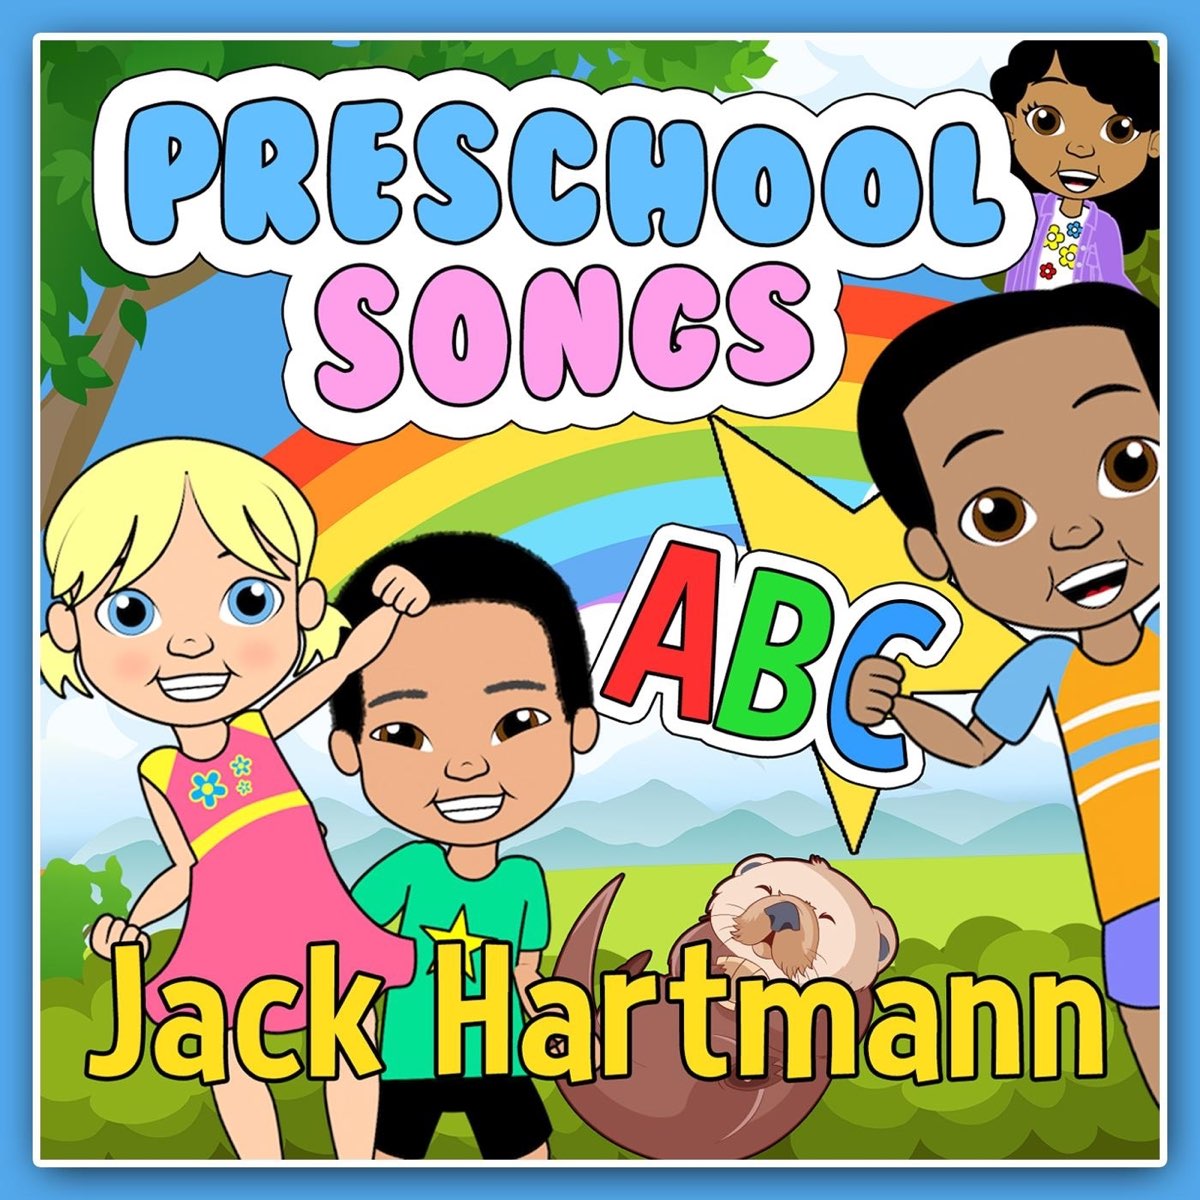 ‎Preschool Songs Album by Jack Hartmann Apple Music